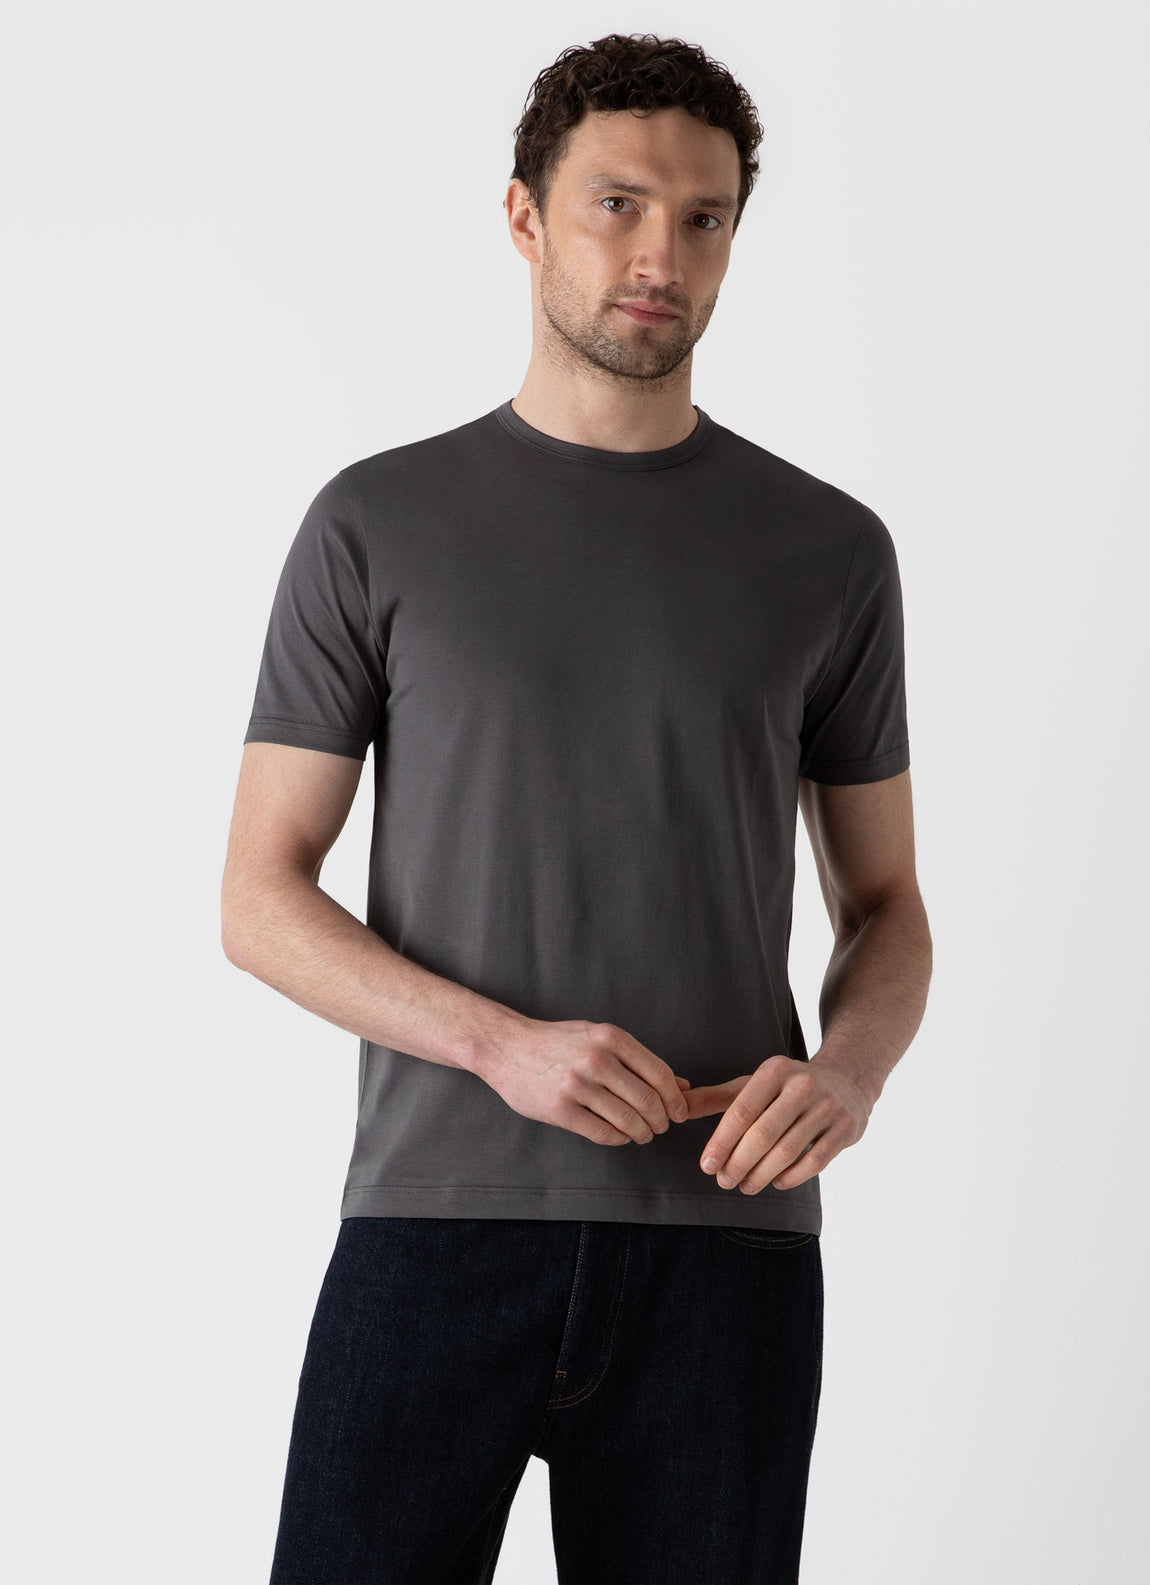 Men's Classic T-shirt in Charcoal